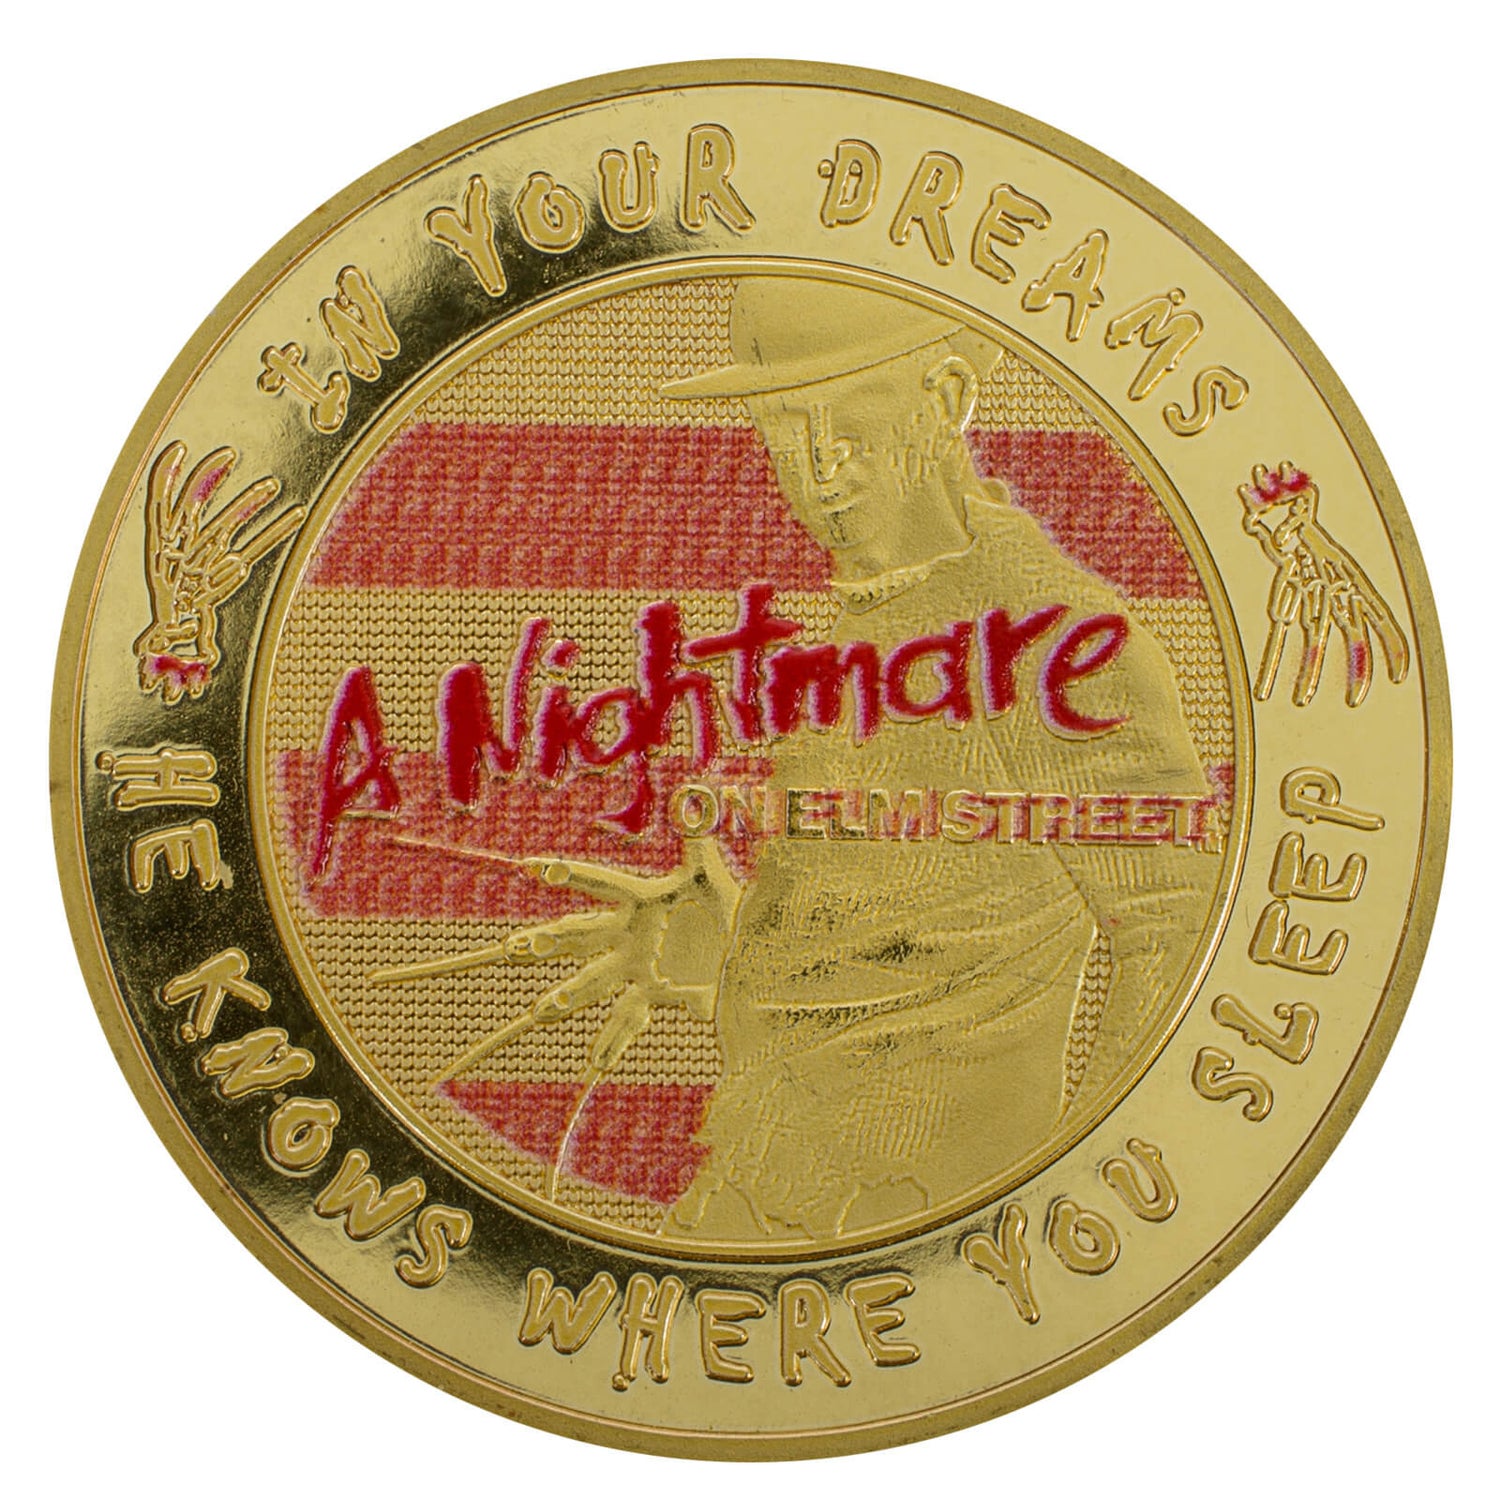 Nightmare on Elm Street coin